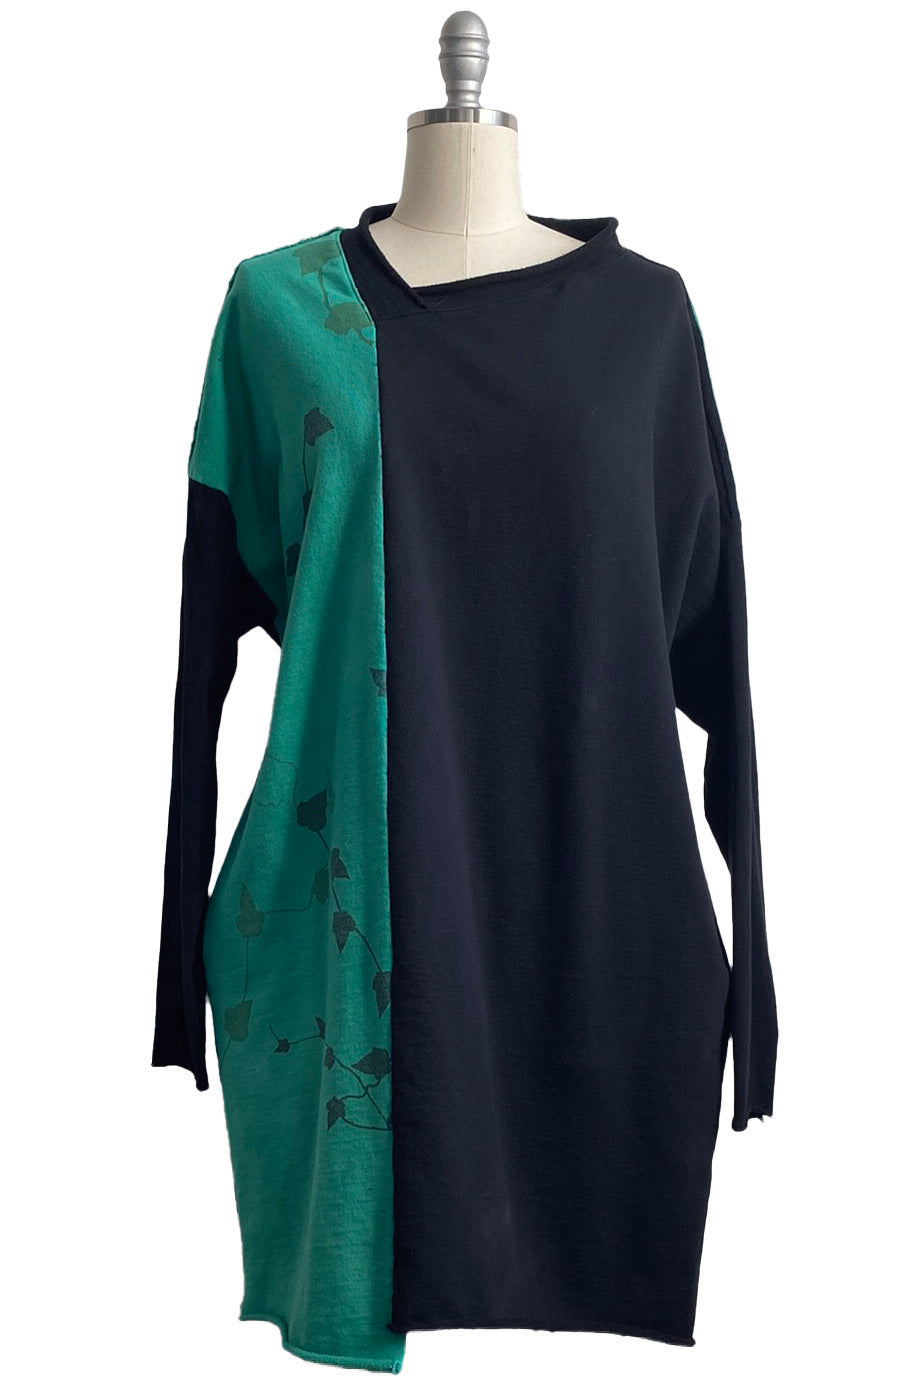 Petra Long Sleeve Tunic Knit w/ Vine Print - Black & Green Overdye - Medium